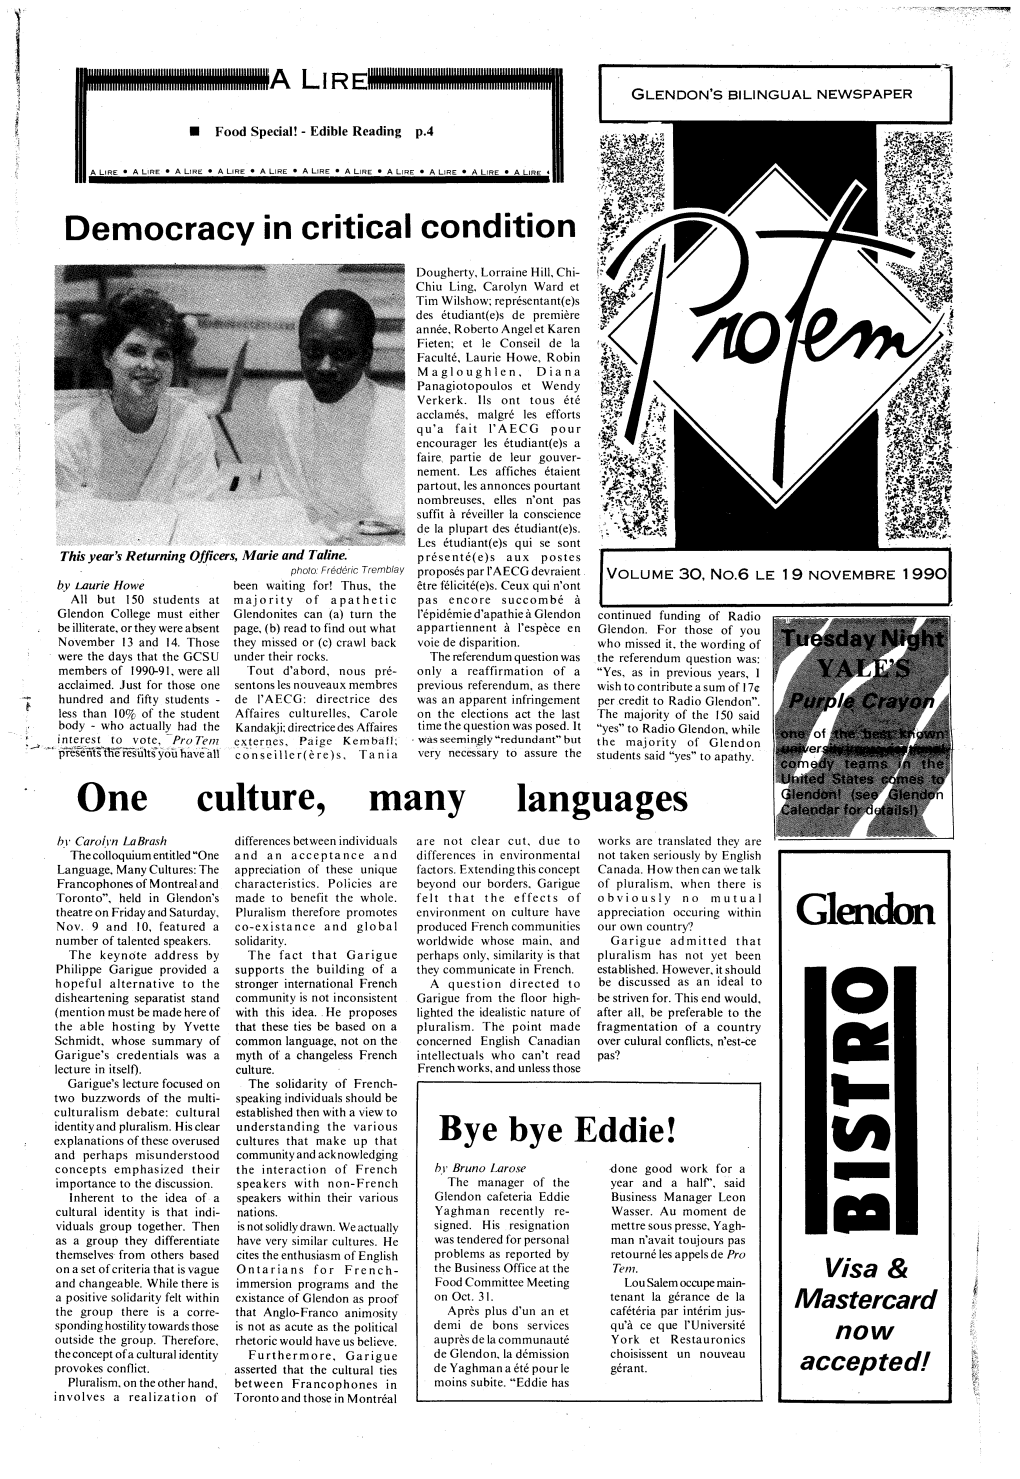 Glendon's Bilingual Newspaper